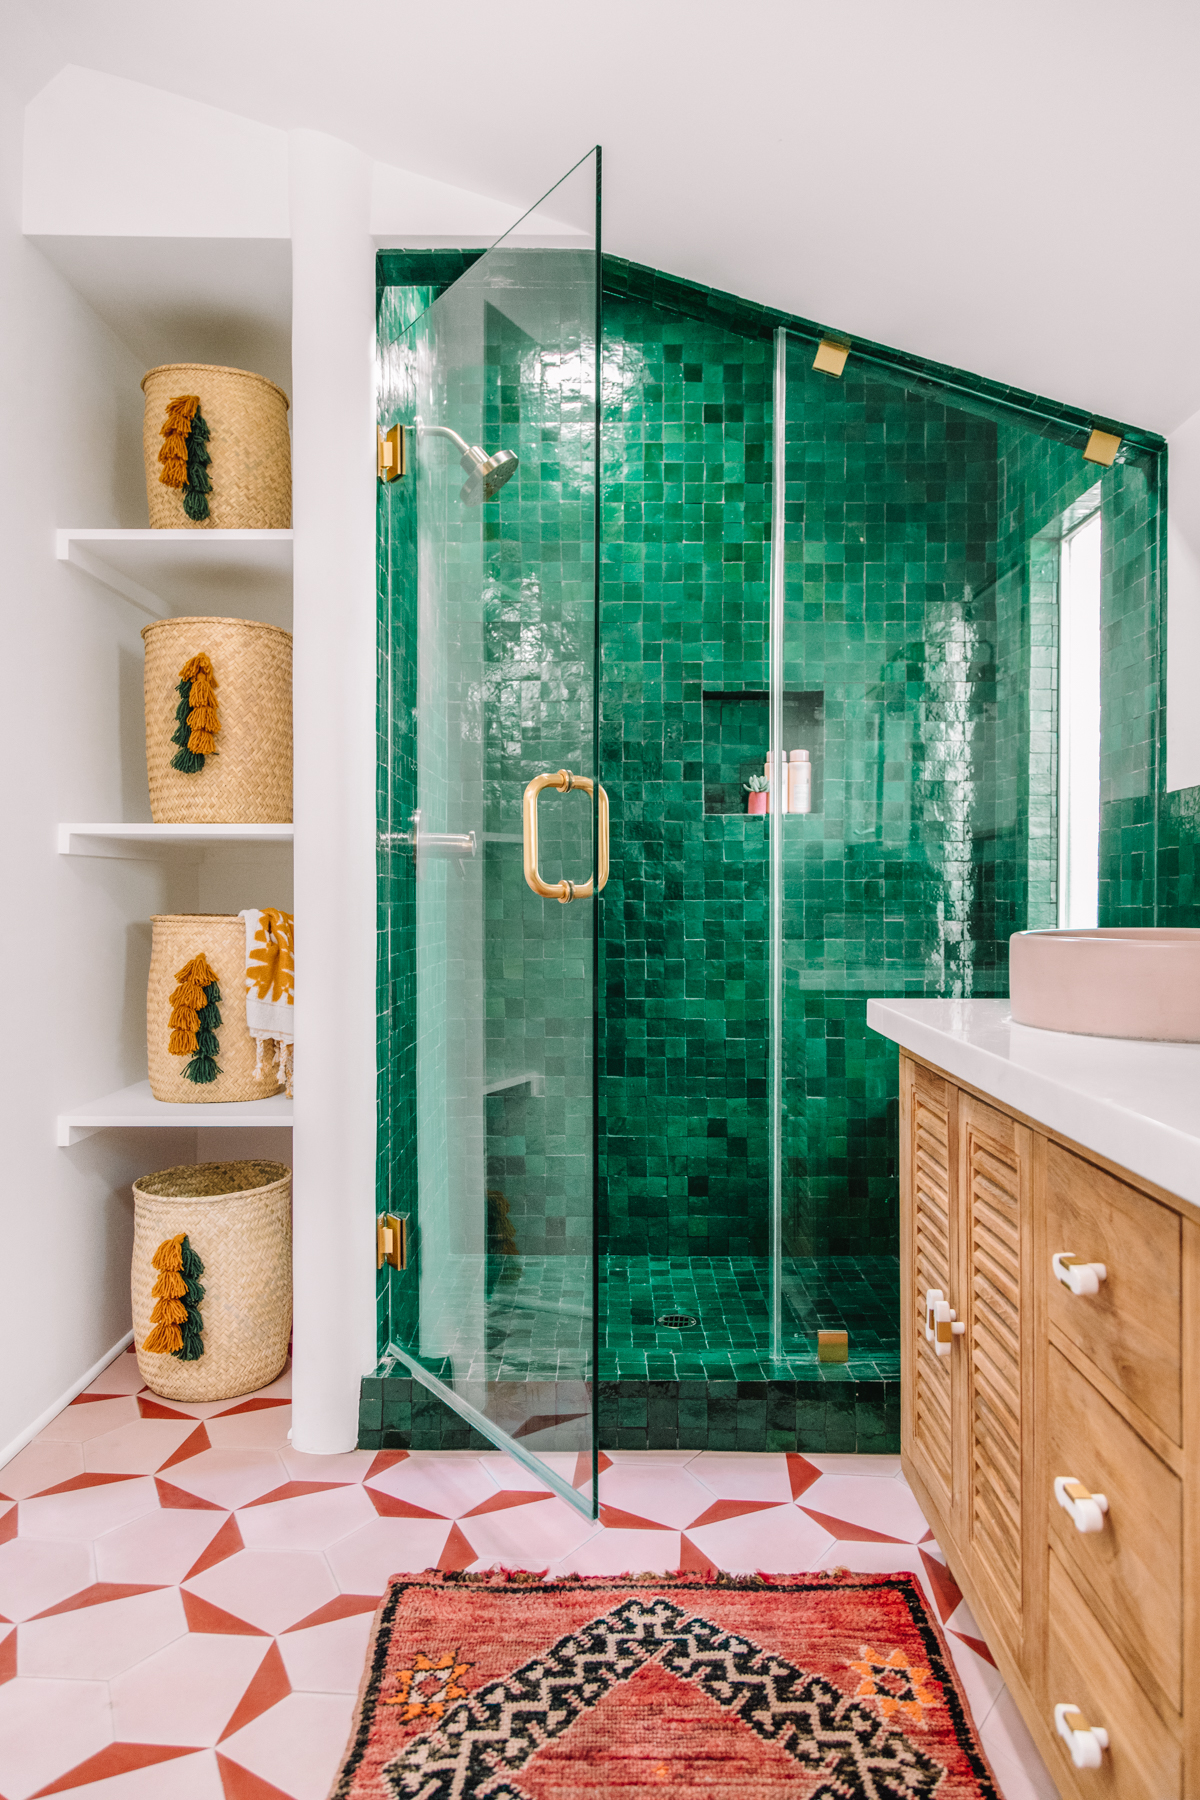 Tiled bathroom by Studio DIY